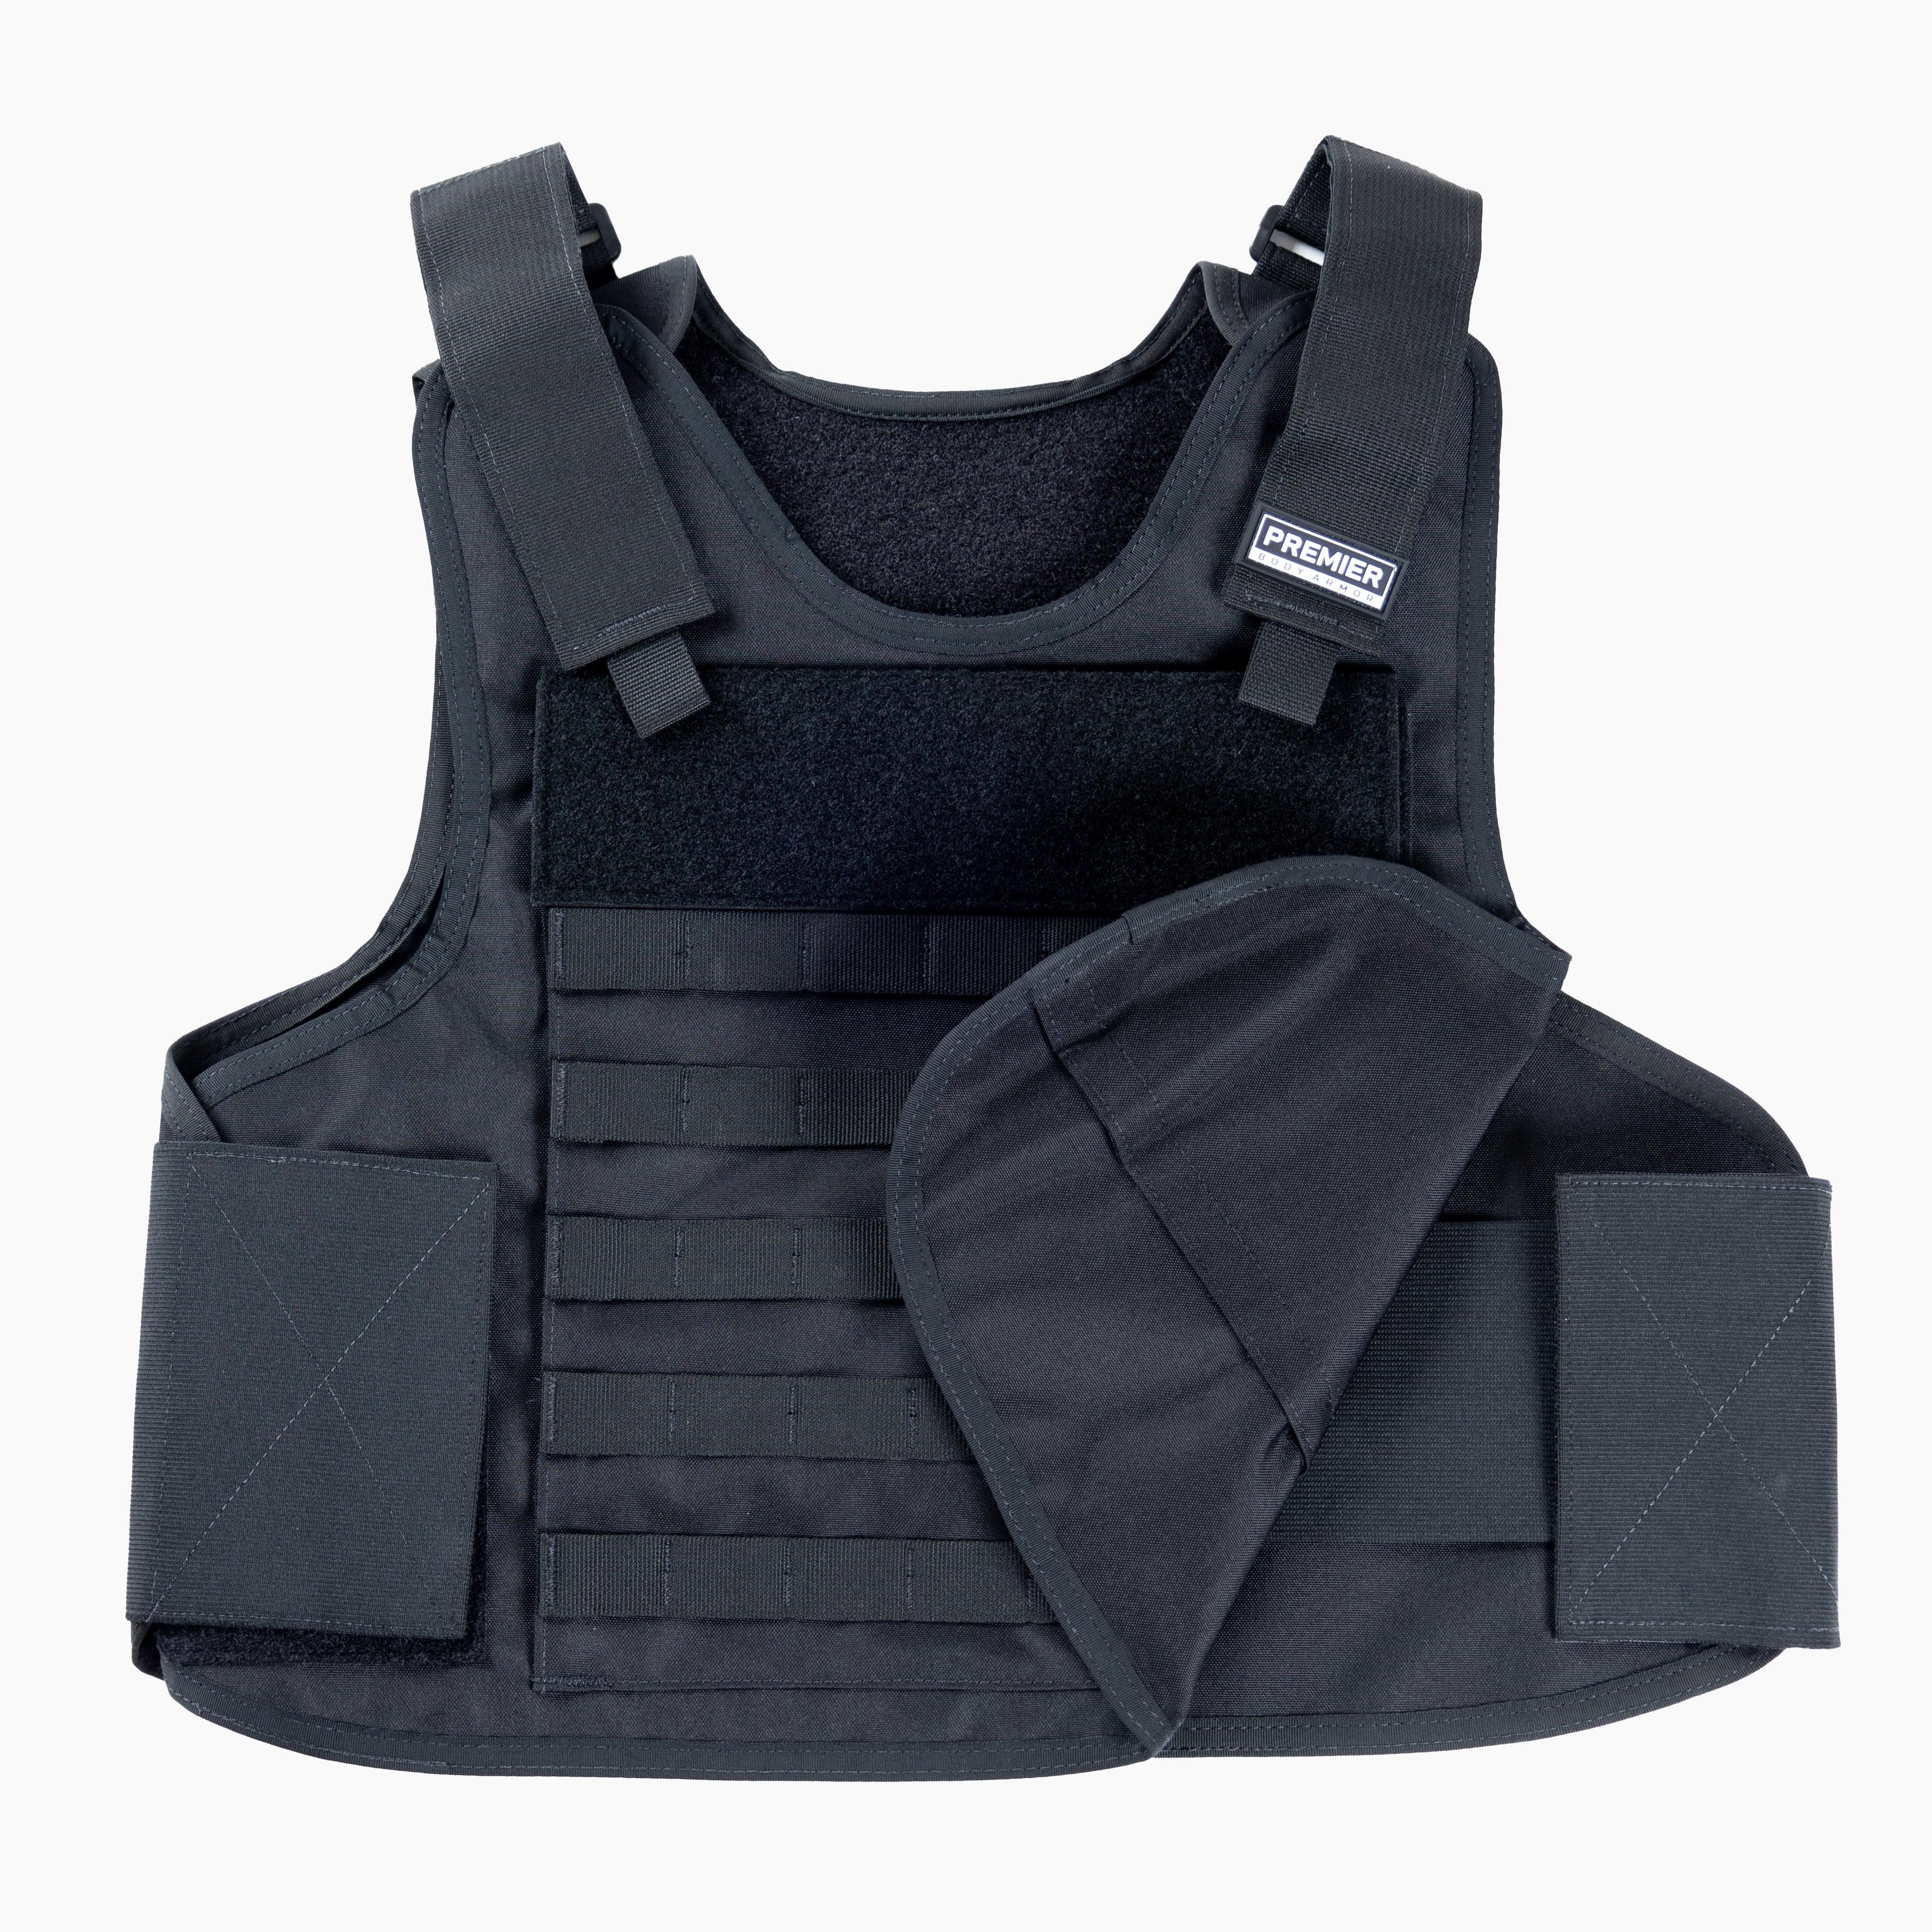 Hybrid Tactical Vest - Carrier Only - Premier Body Armor